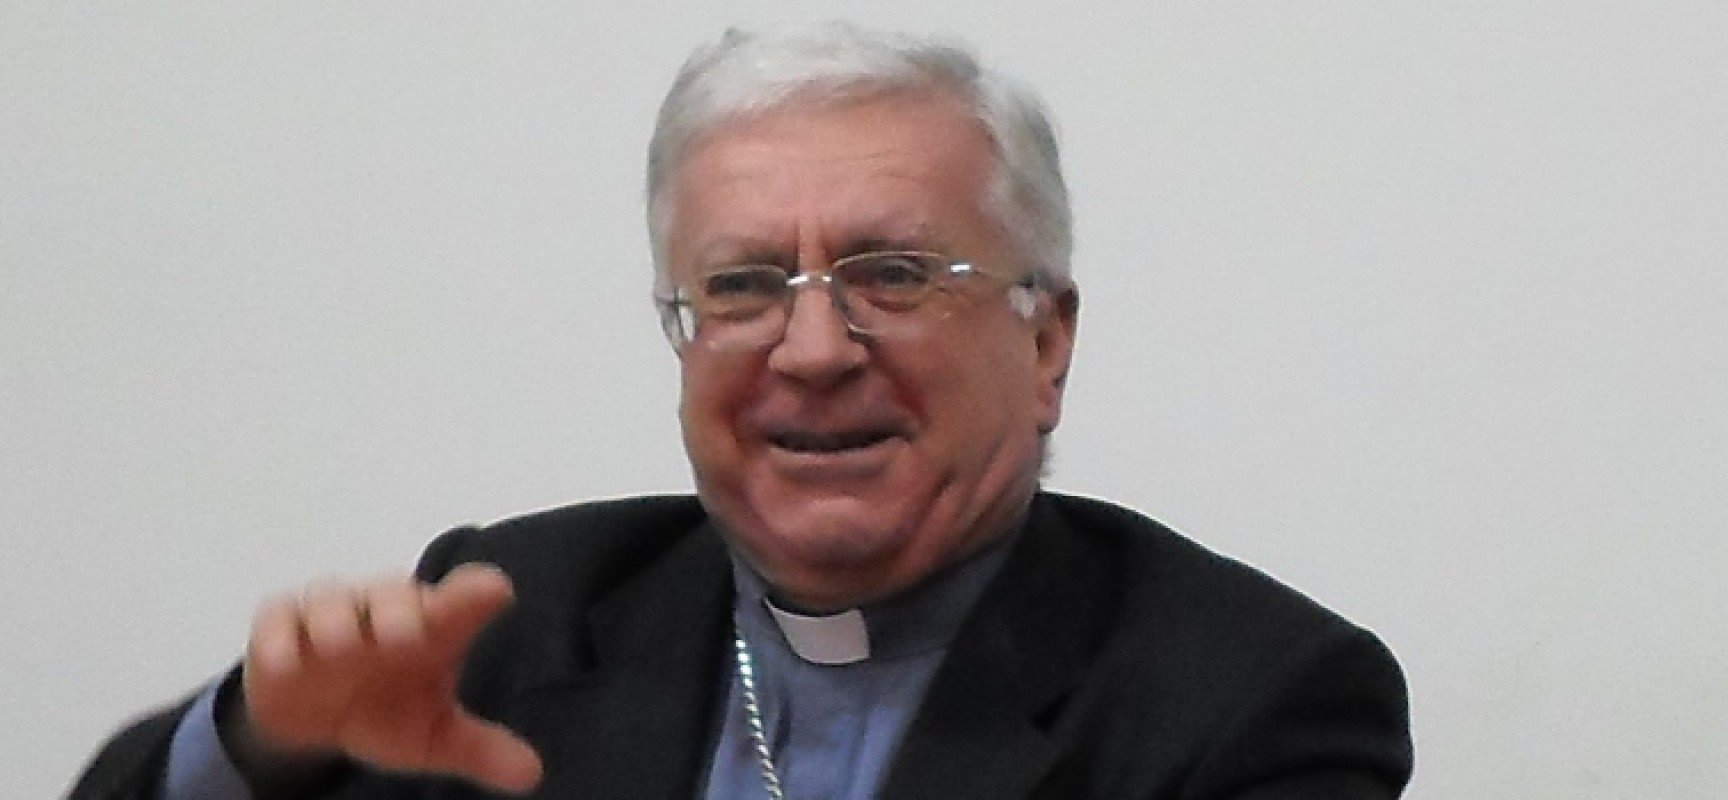 Mons. Giovanni Ricchiuti pres pax christi